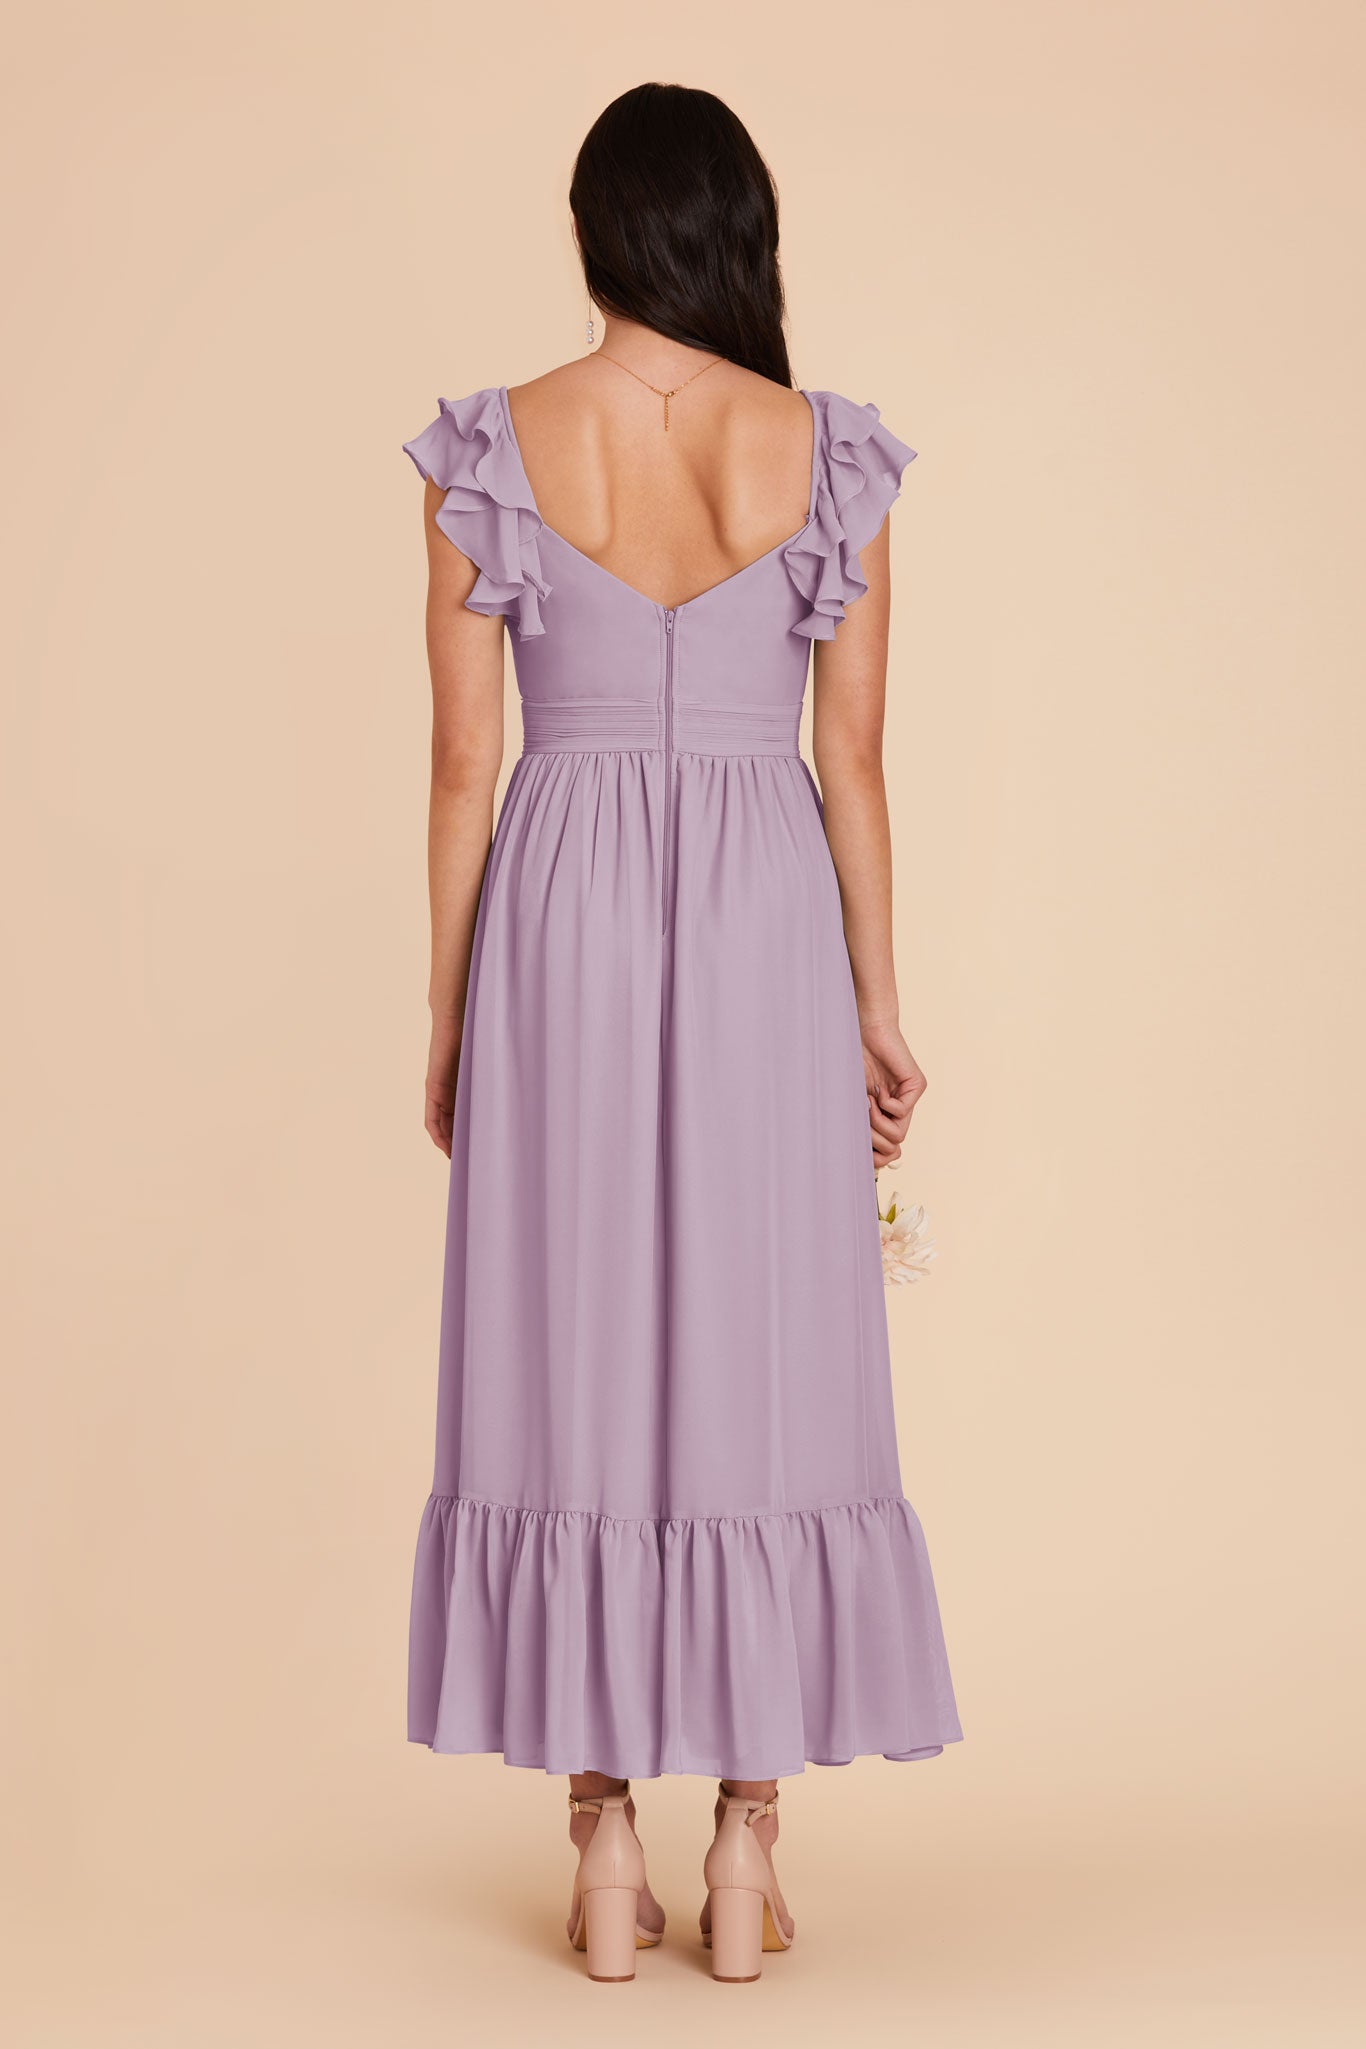 Lavender michelle Chiffon Dress by Birdy Grey